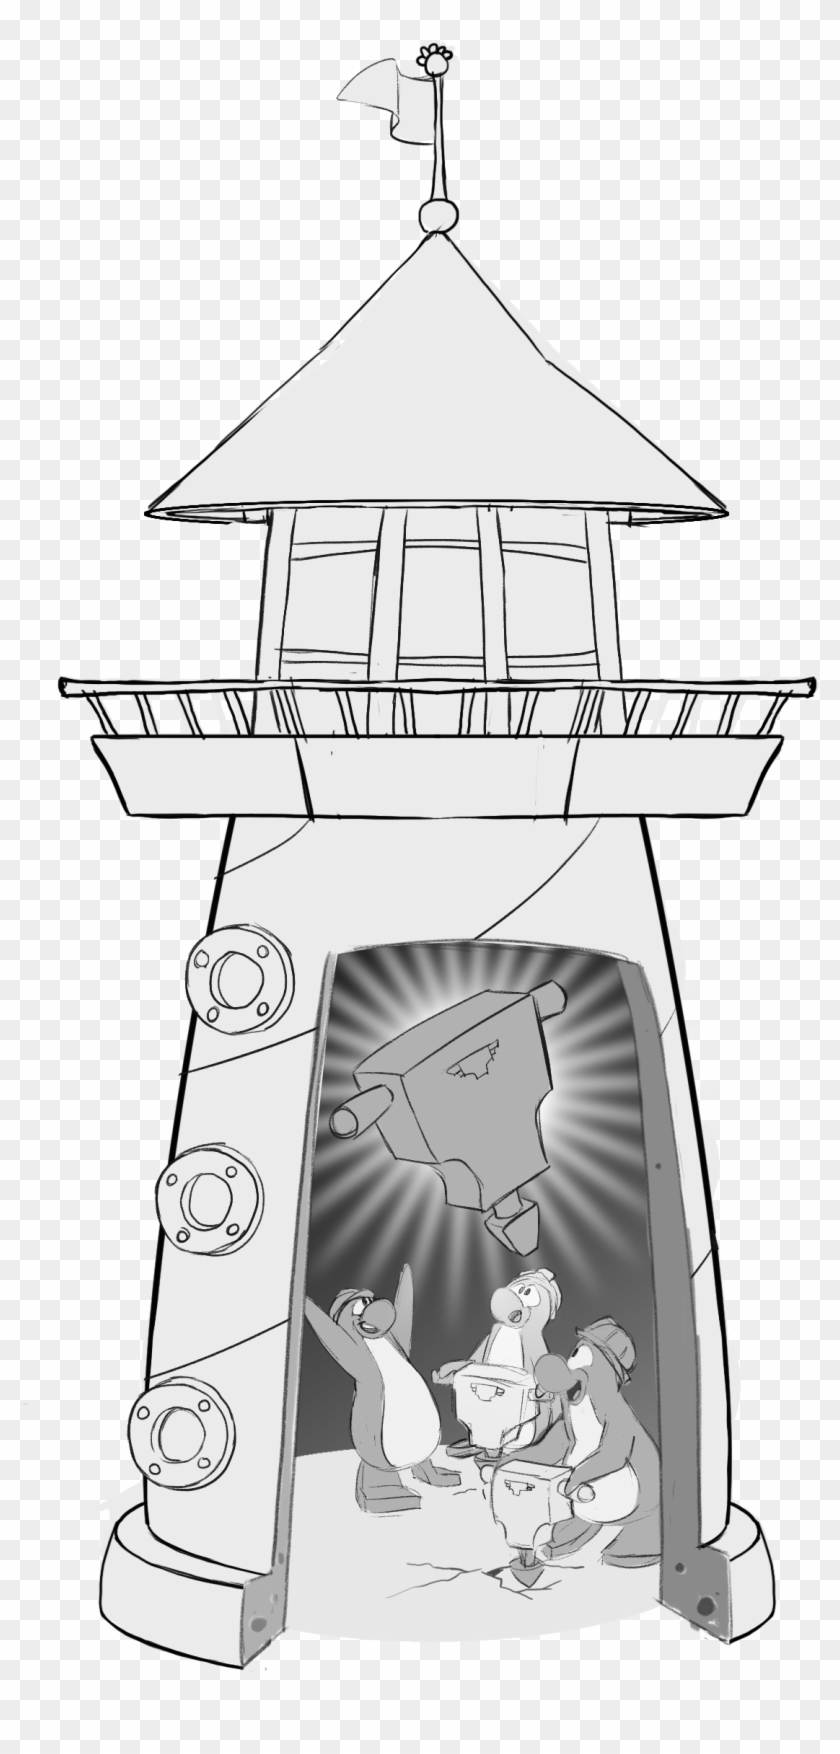 Lighthouse Fornewsfeed Jackhammer - Cartoon Clipart #4701735